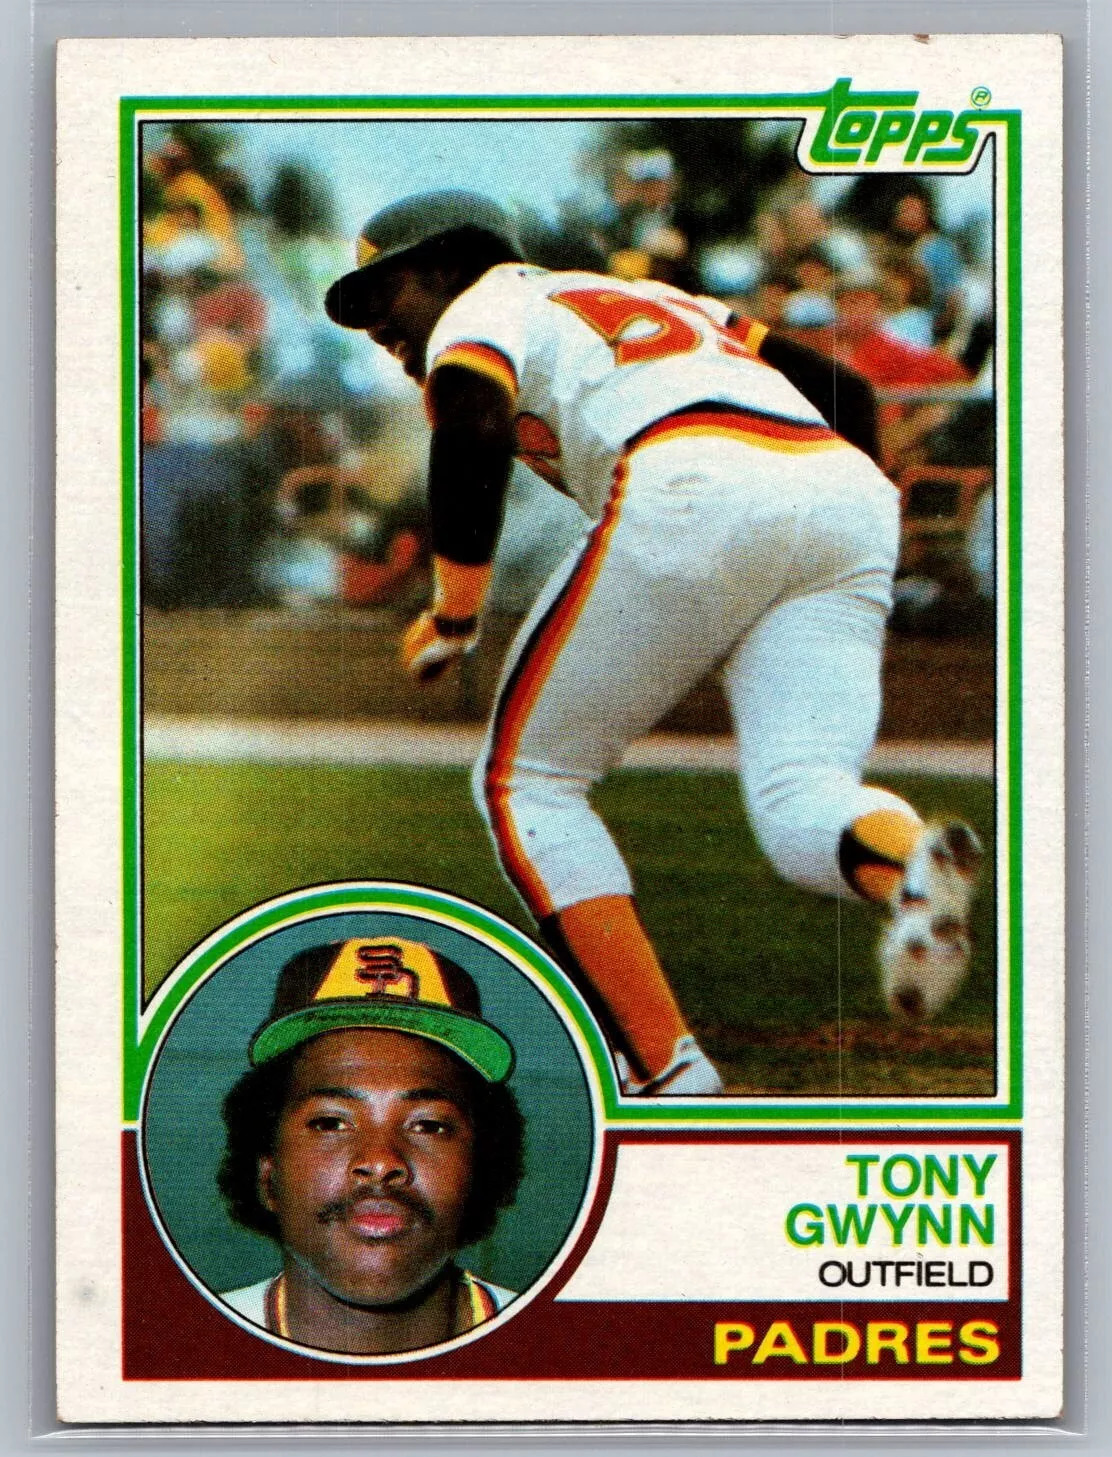 1983 Topps Tony Gwynn rookie card